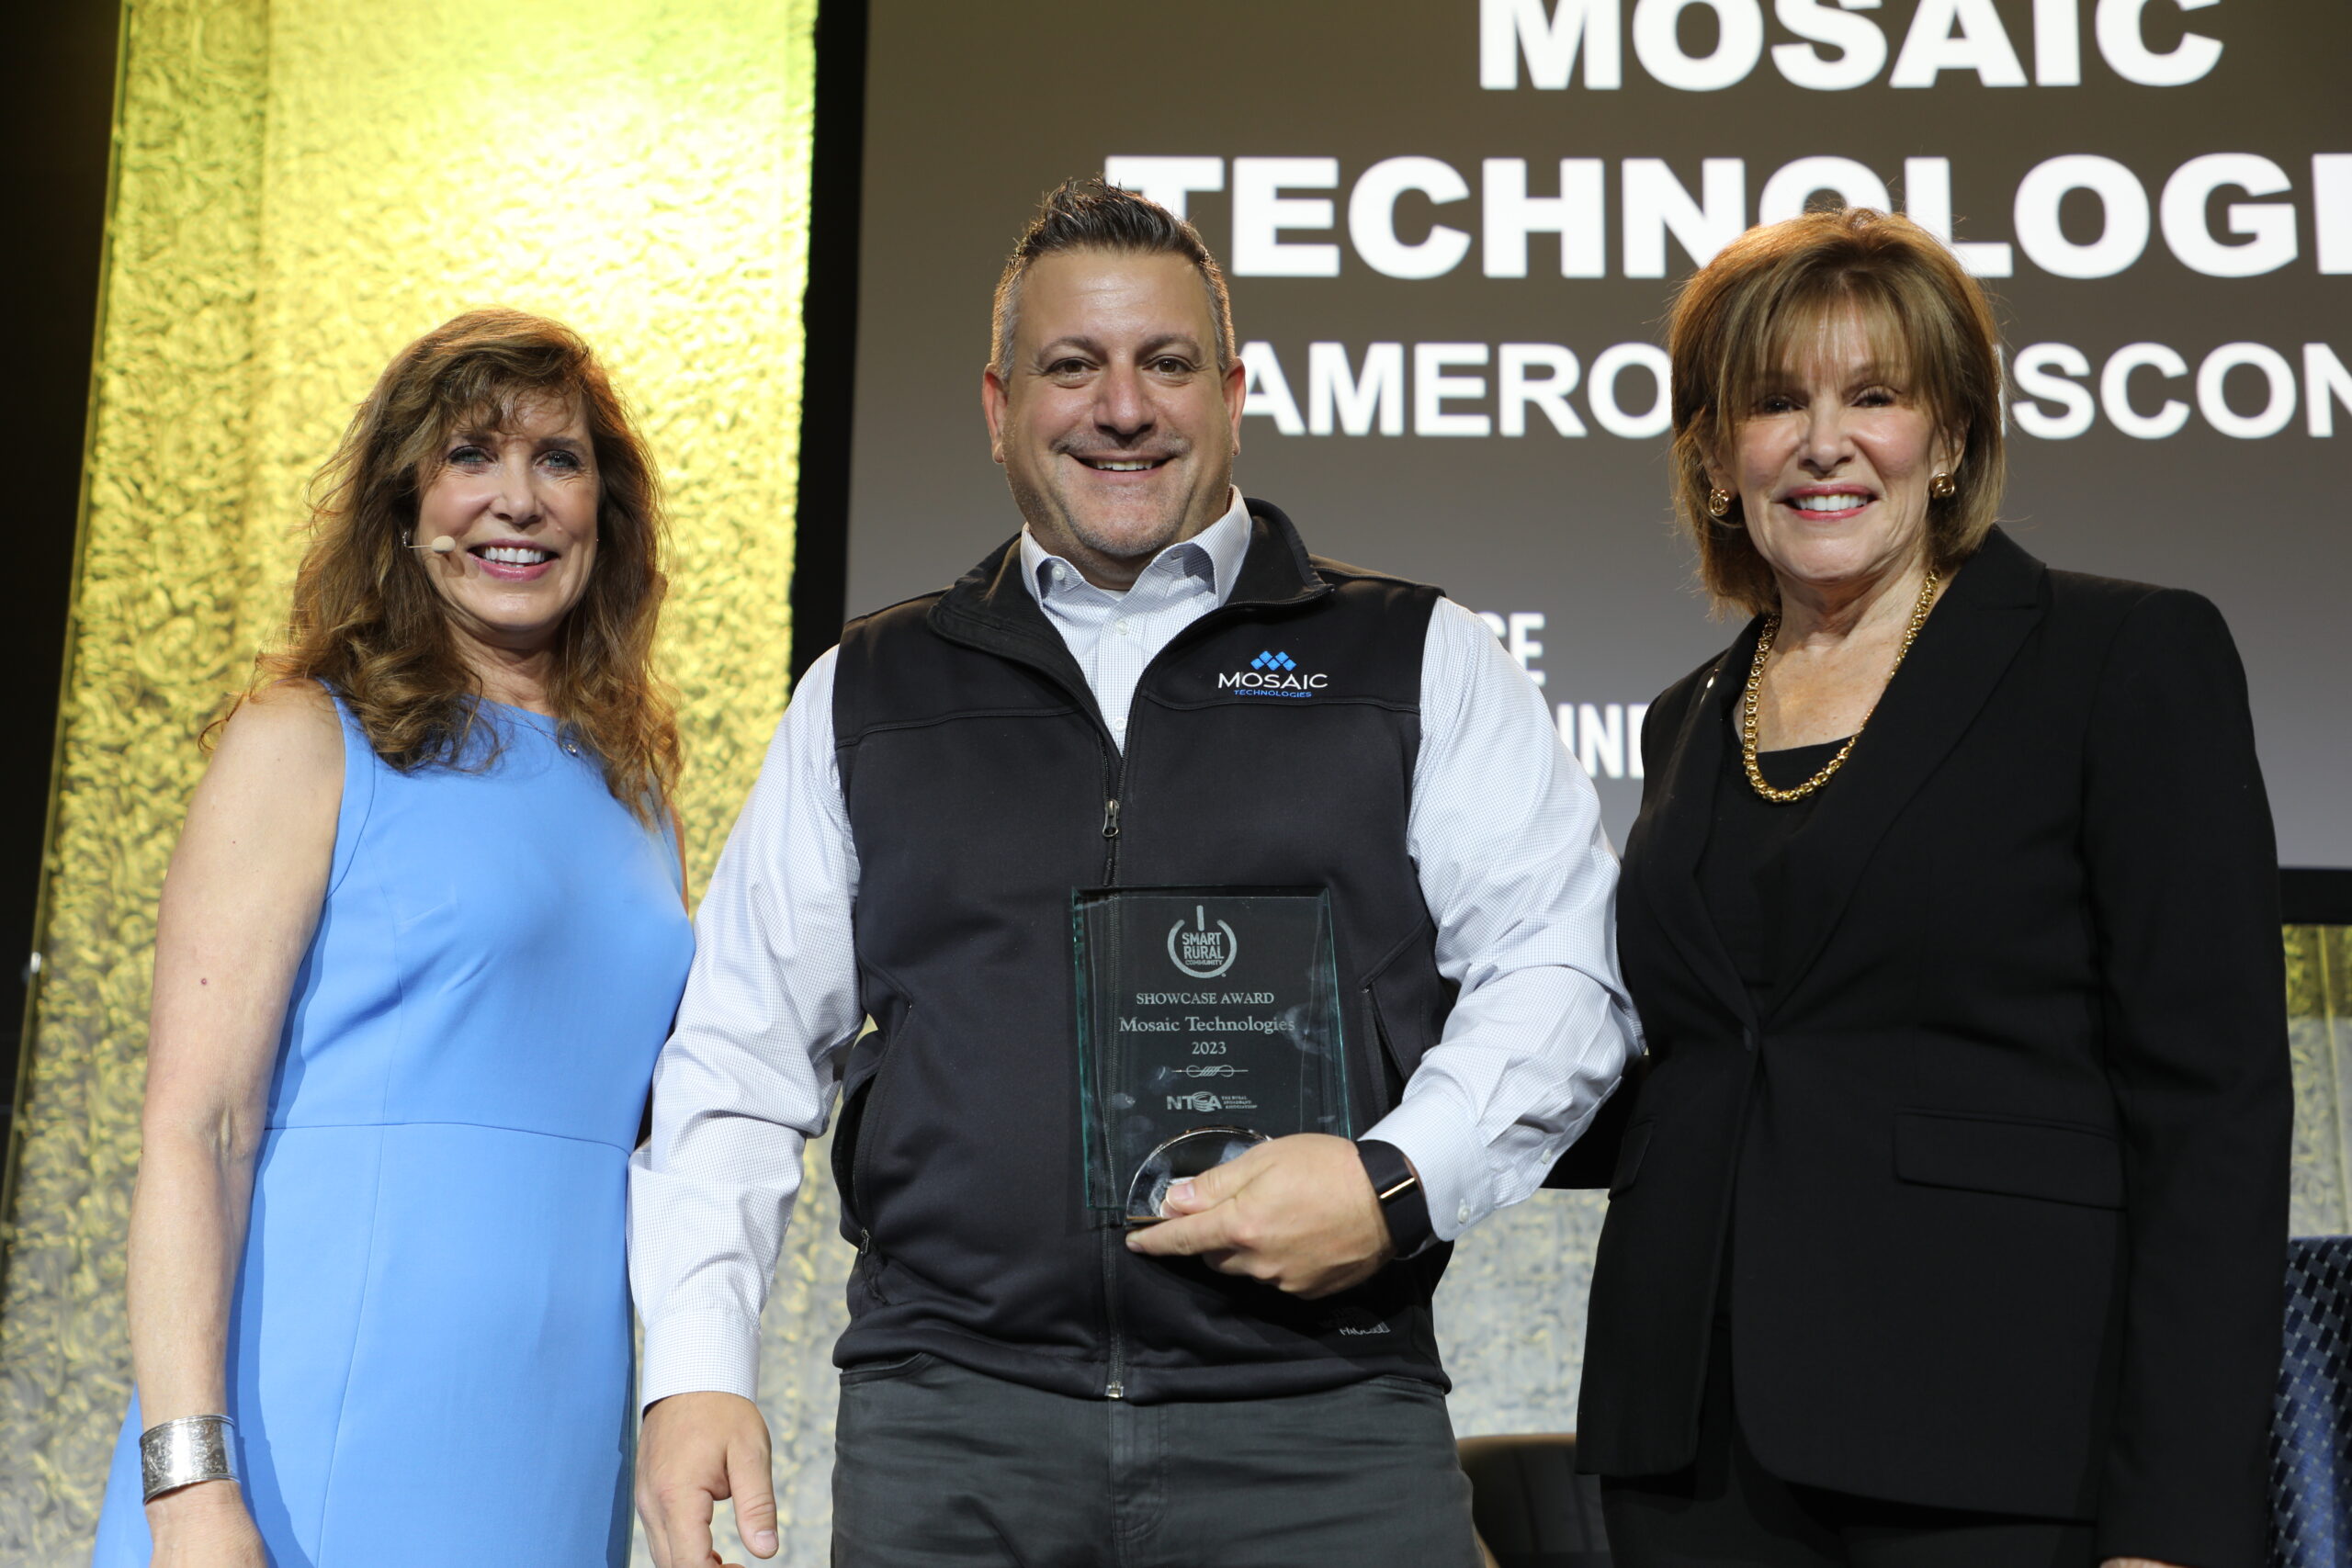 Ceo, Domenico Fornaro Receives 2023 Showcase Award on Behalf of Mosaic Technologies | Mosaic Technolgies